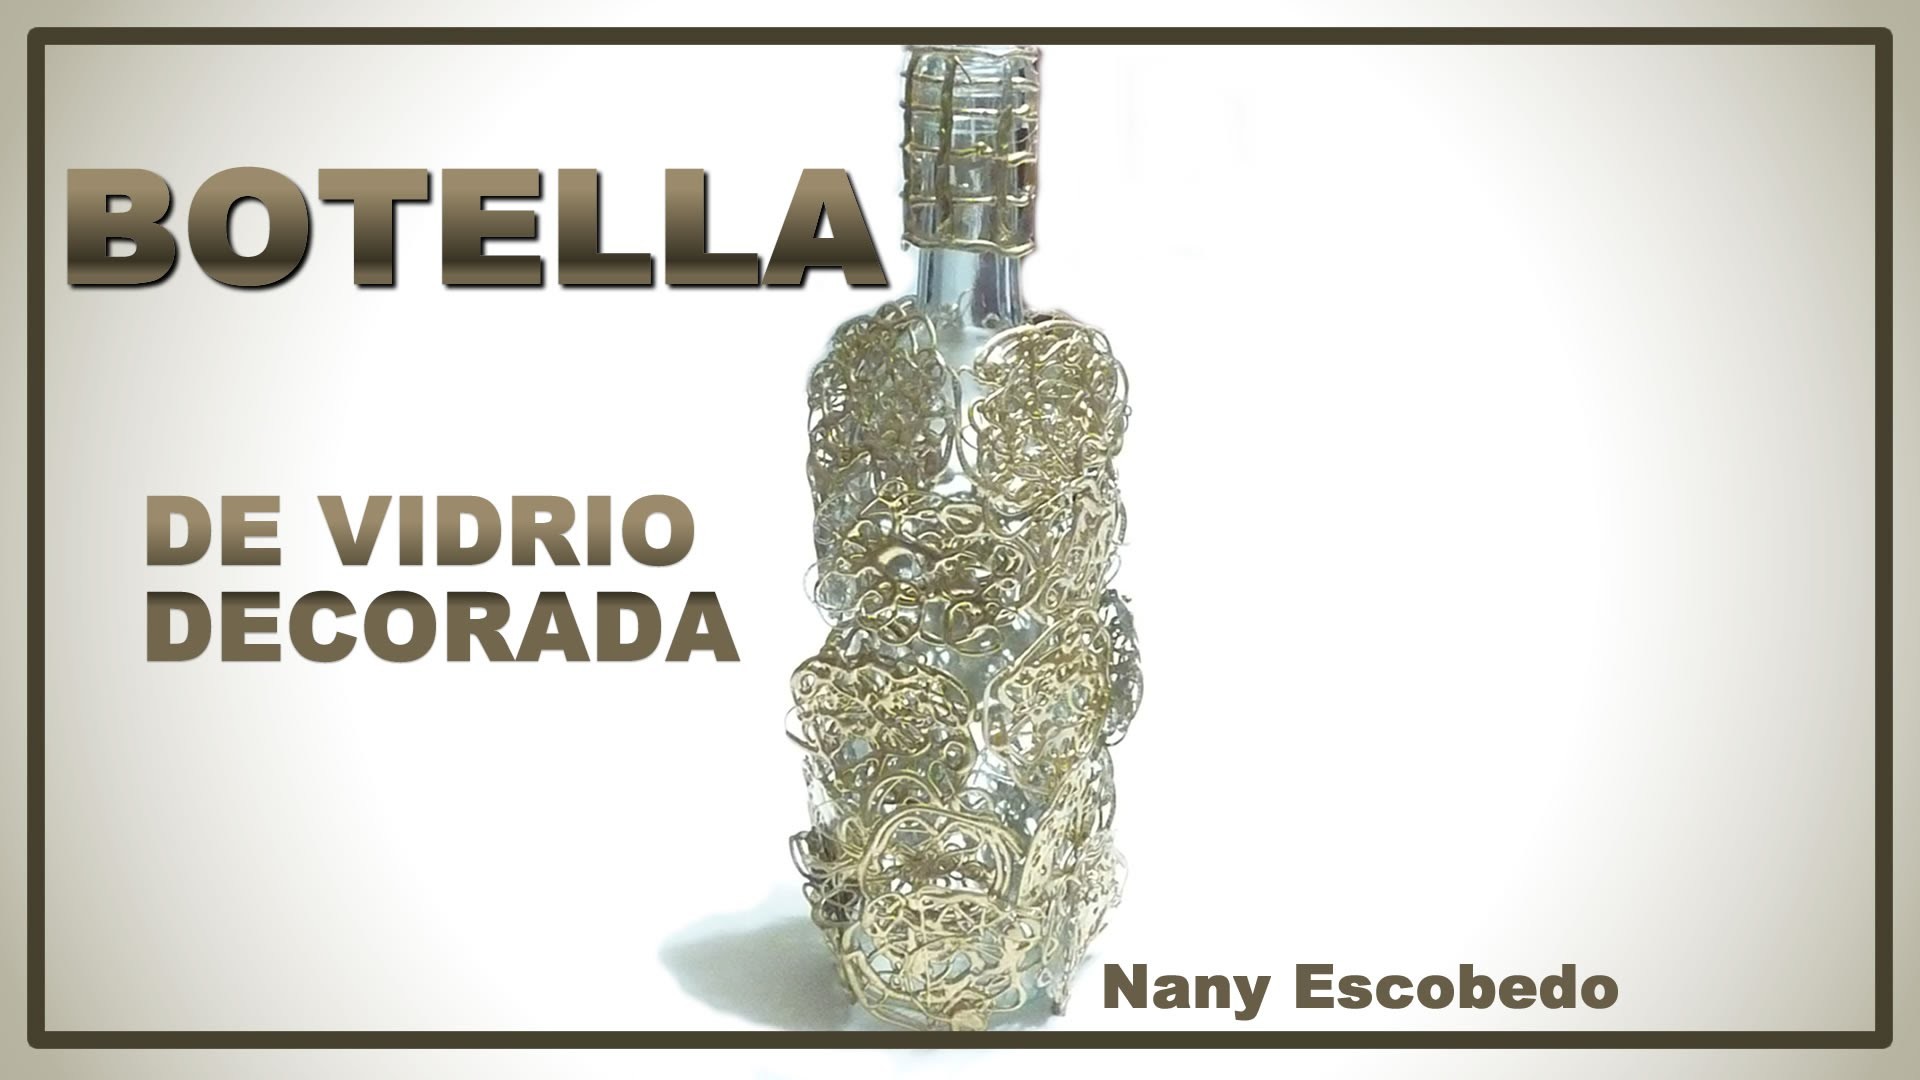 BOTELLA DE VIDRIO DECORADA. DECORATED GLASS BOTTLE